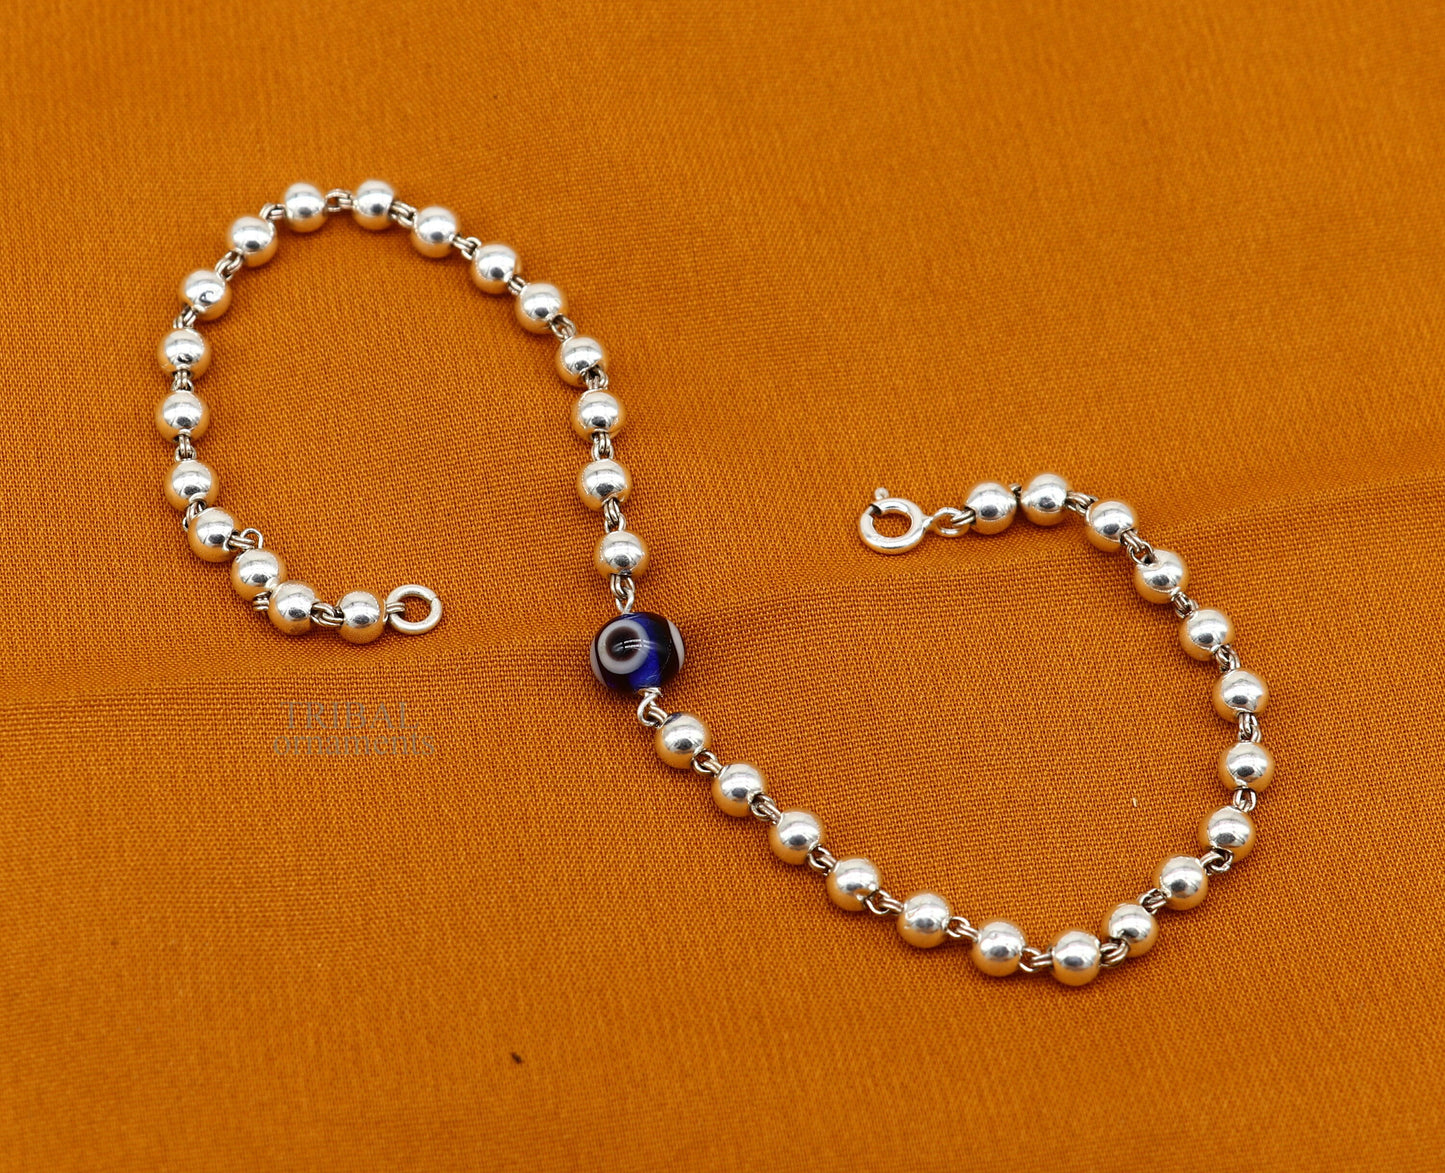 925 sterling silver handmade beaded evil eye bracelet, amazing stylish unisex bracelet 9 inches long jewelry nsbr475 - TRIBAL ORNAMENTS